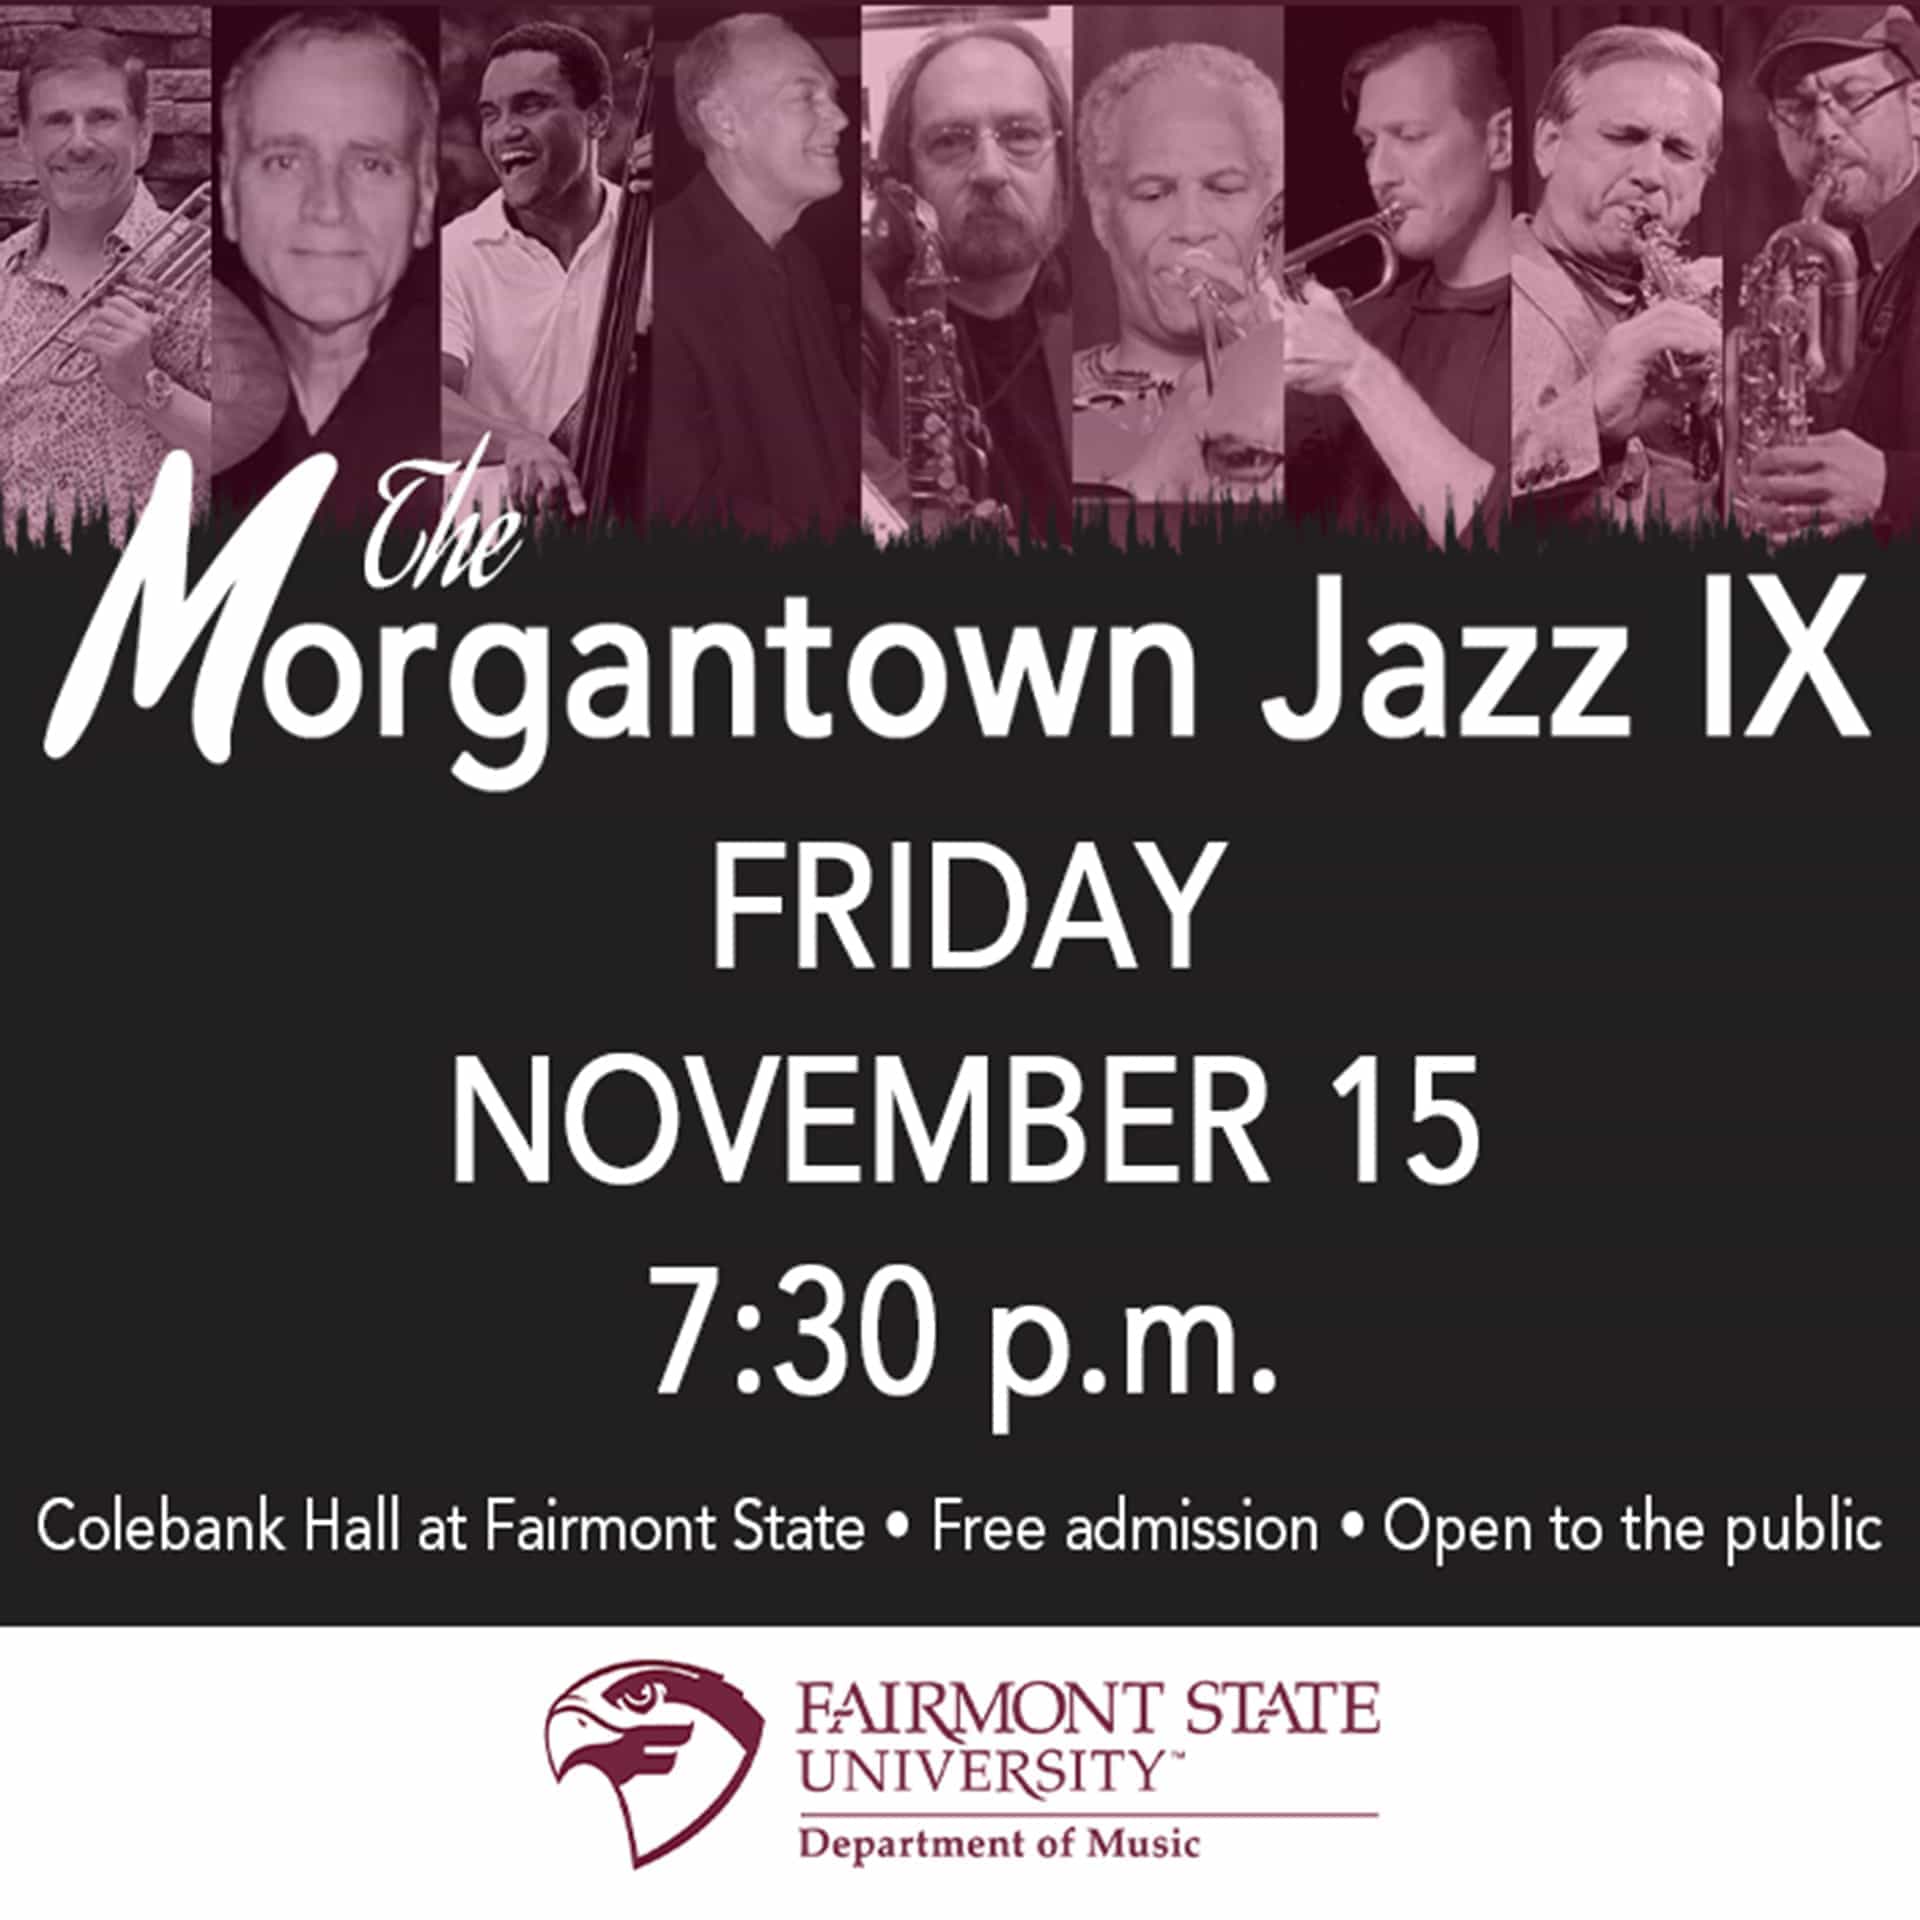 Morgantown’s premier Big Band Jazz ensemble coming to Fairmont State